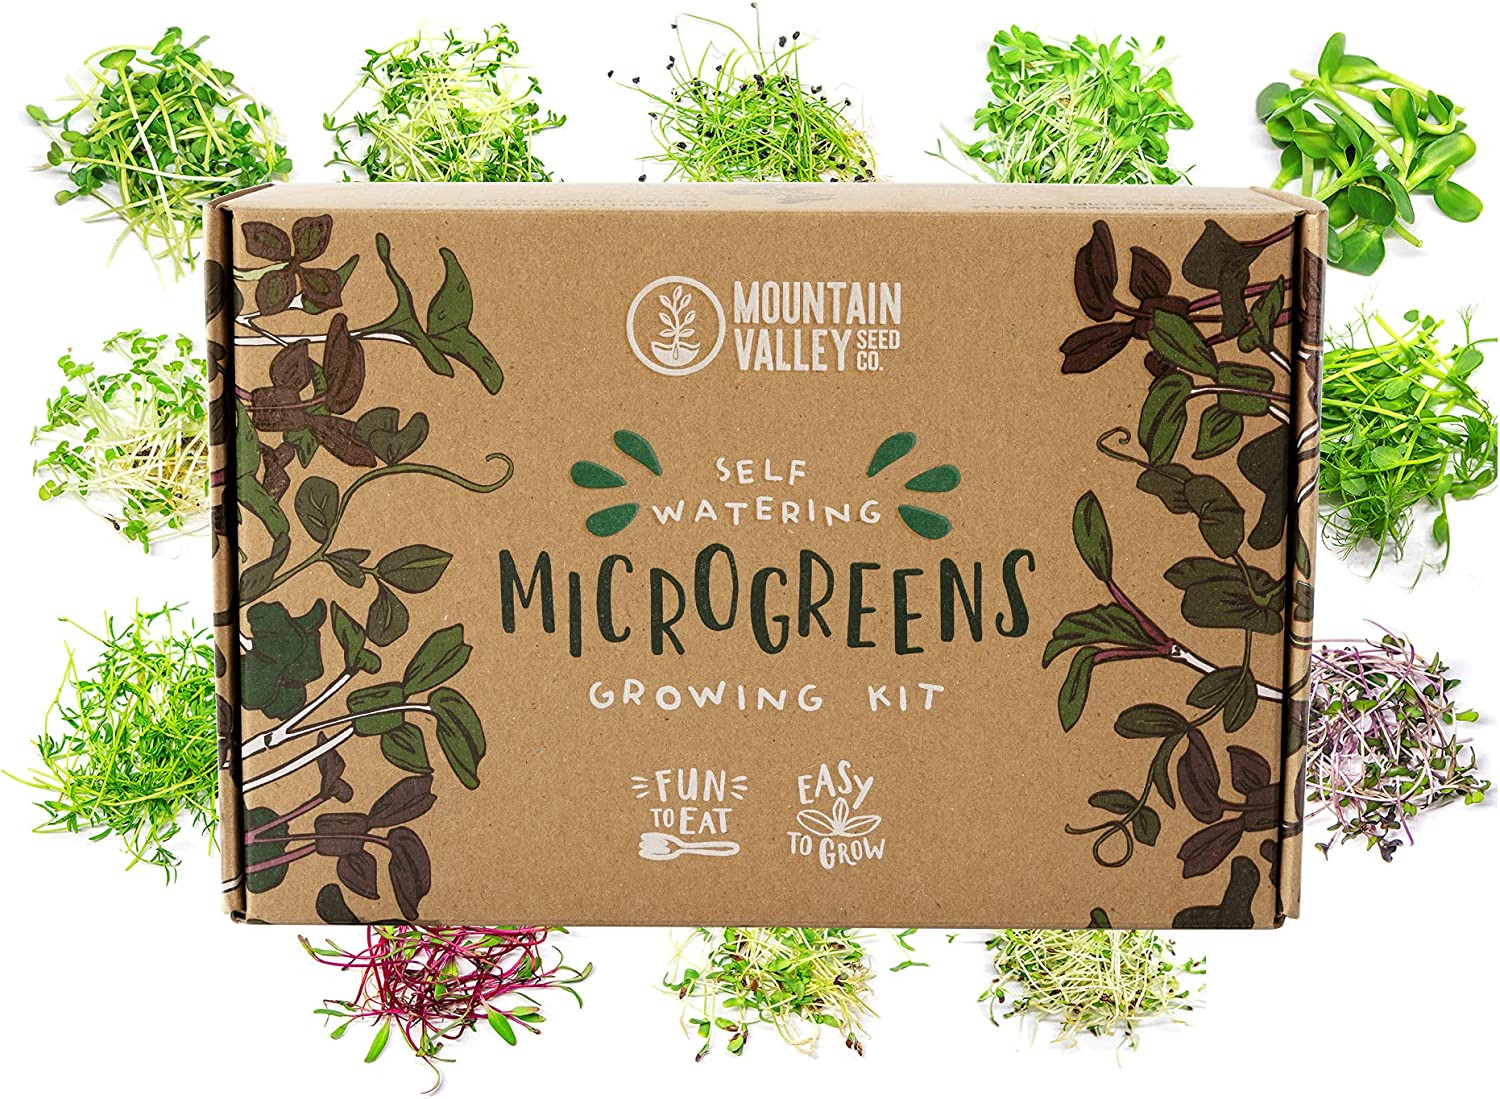 Self Watering Indoor Microgreens Kit - Complete Soil Microgreens Growing Kit for